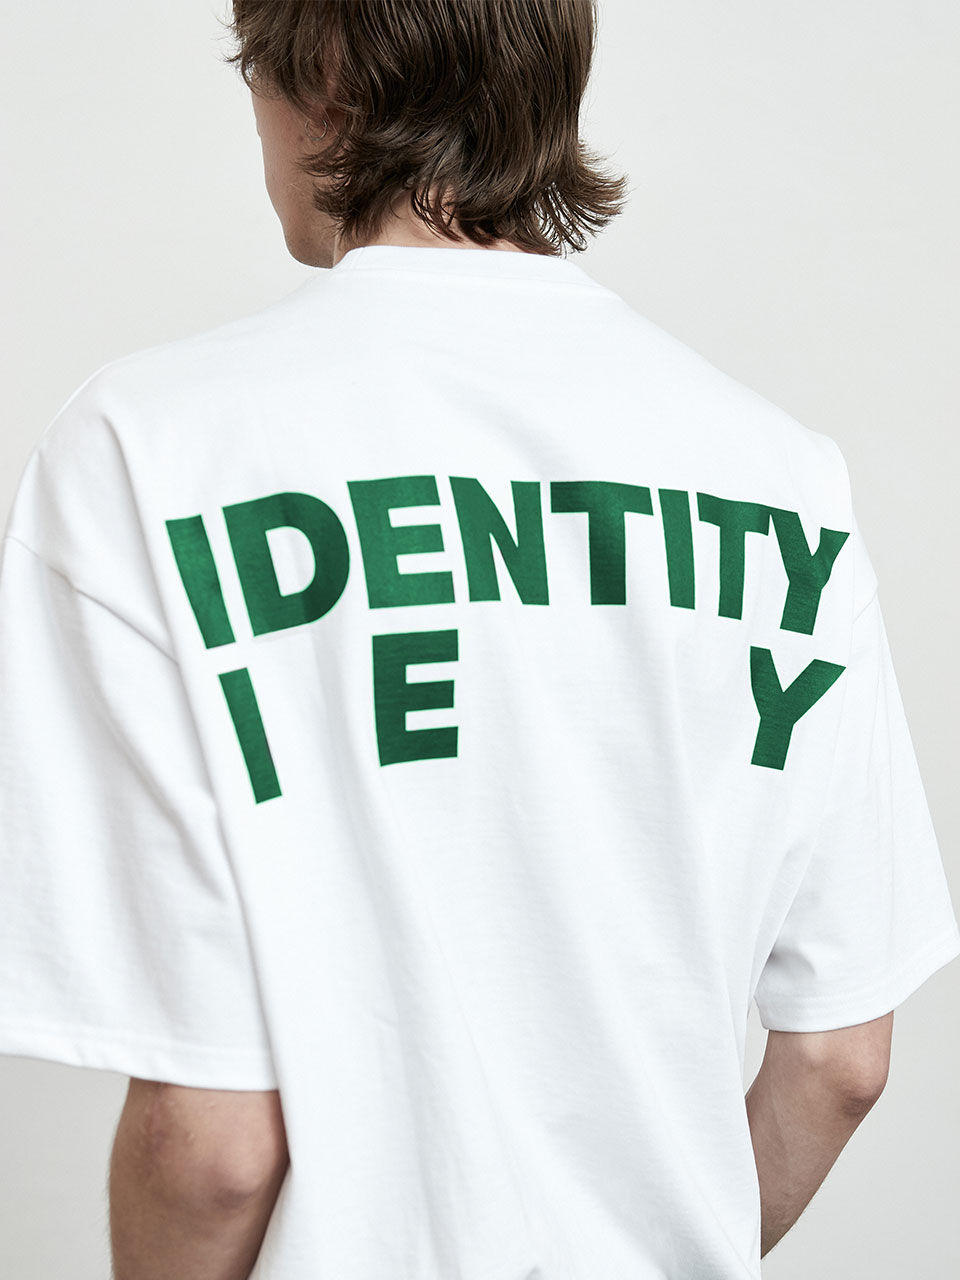 IEY - IDENTITY BACK LOGO T-SHIRT White/Green